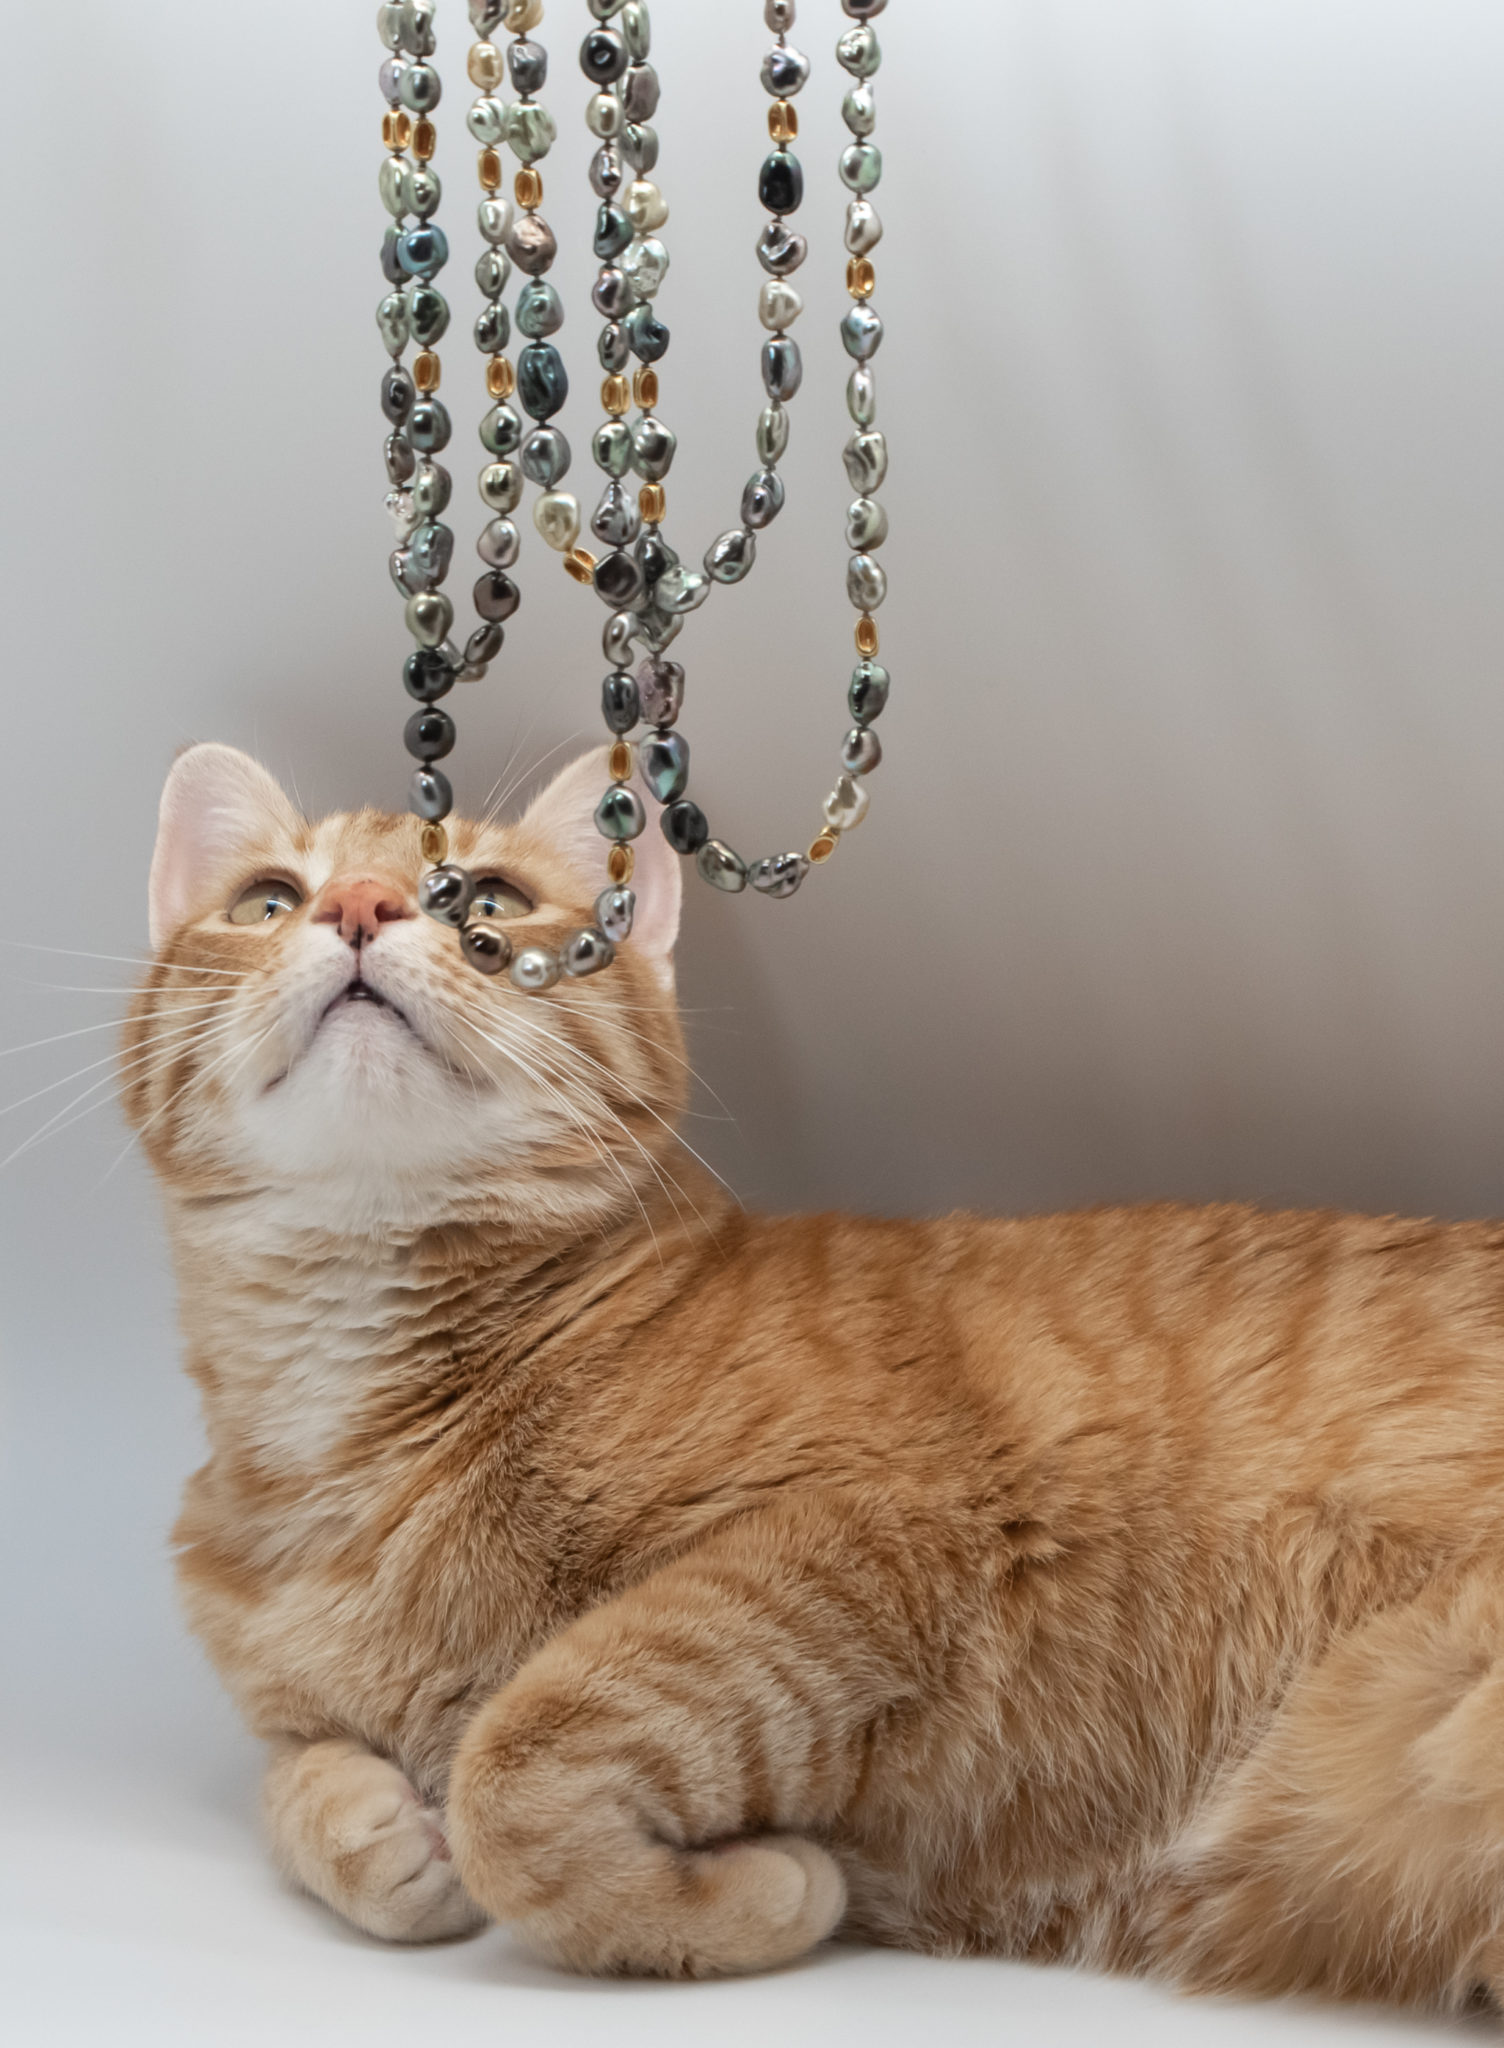 Photograph of Bento kitty gazing up at Tahitian Keshi pearl necklace